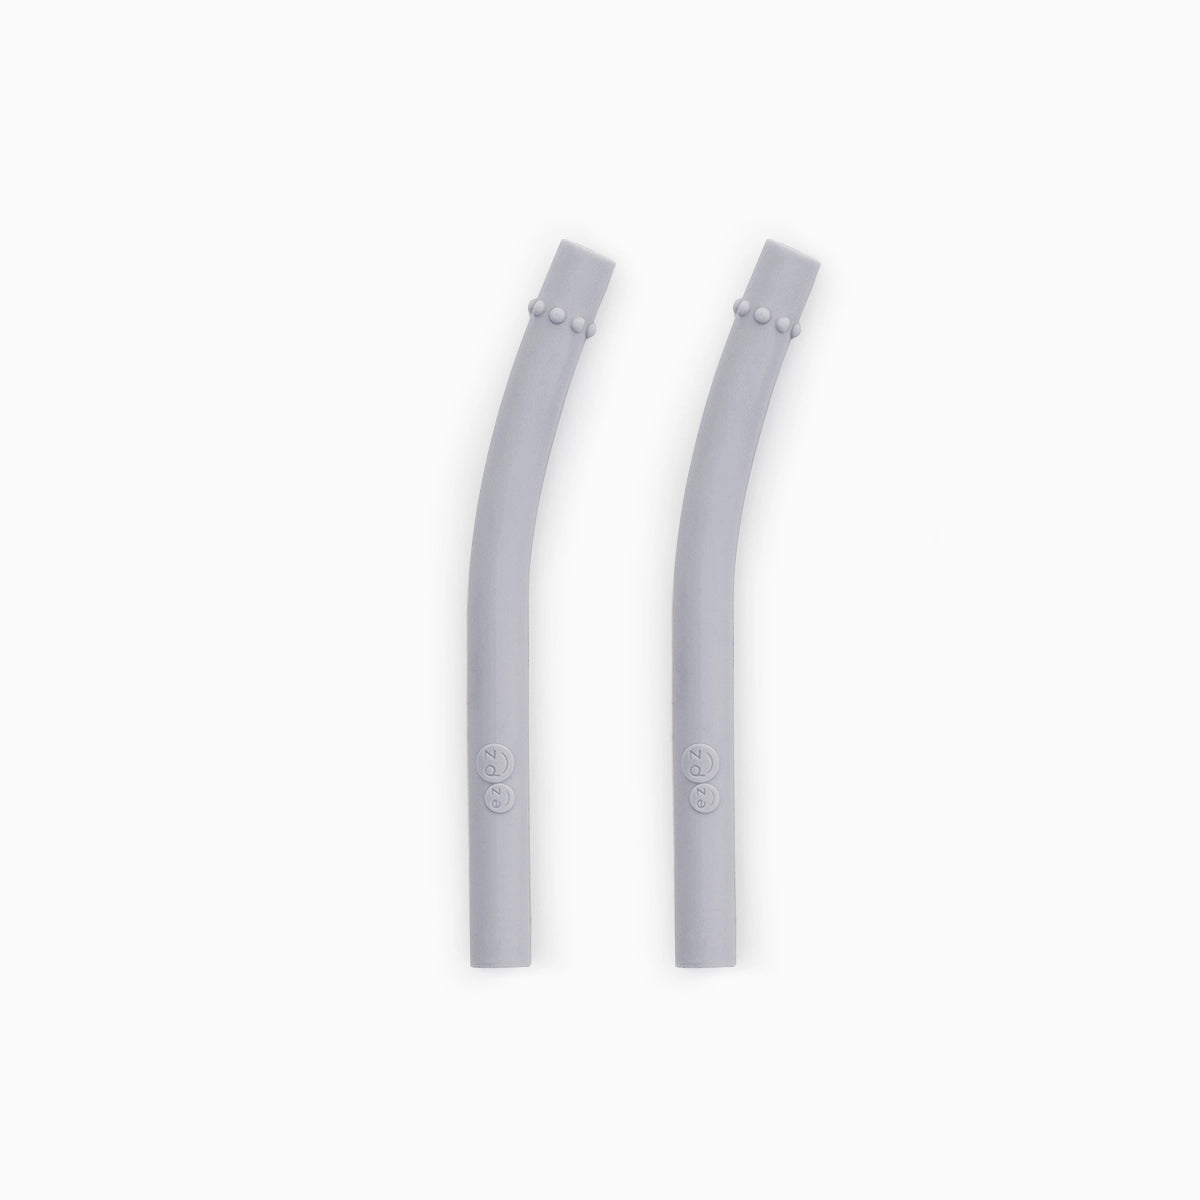 ezpz - Mini Straws